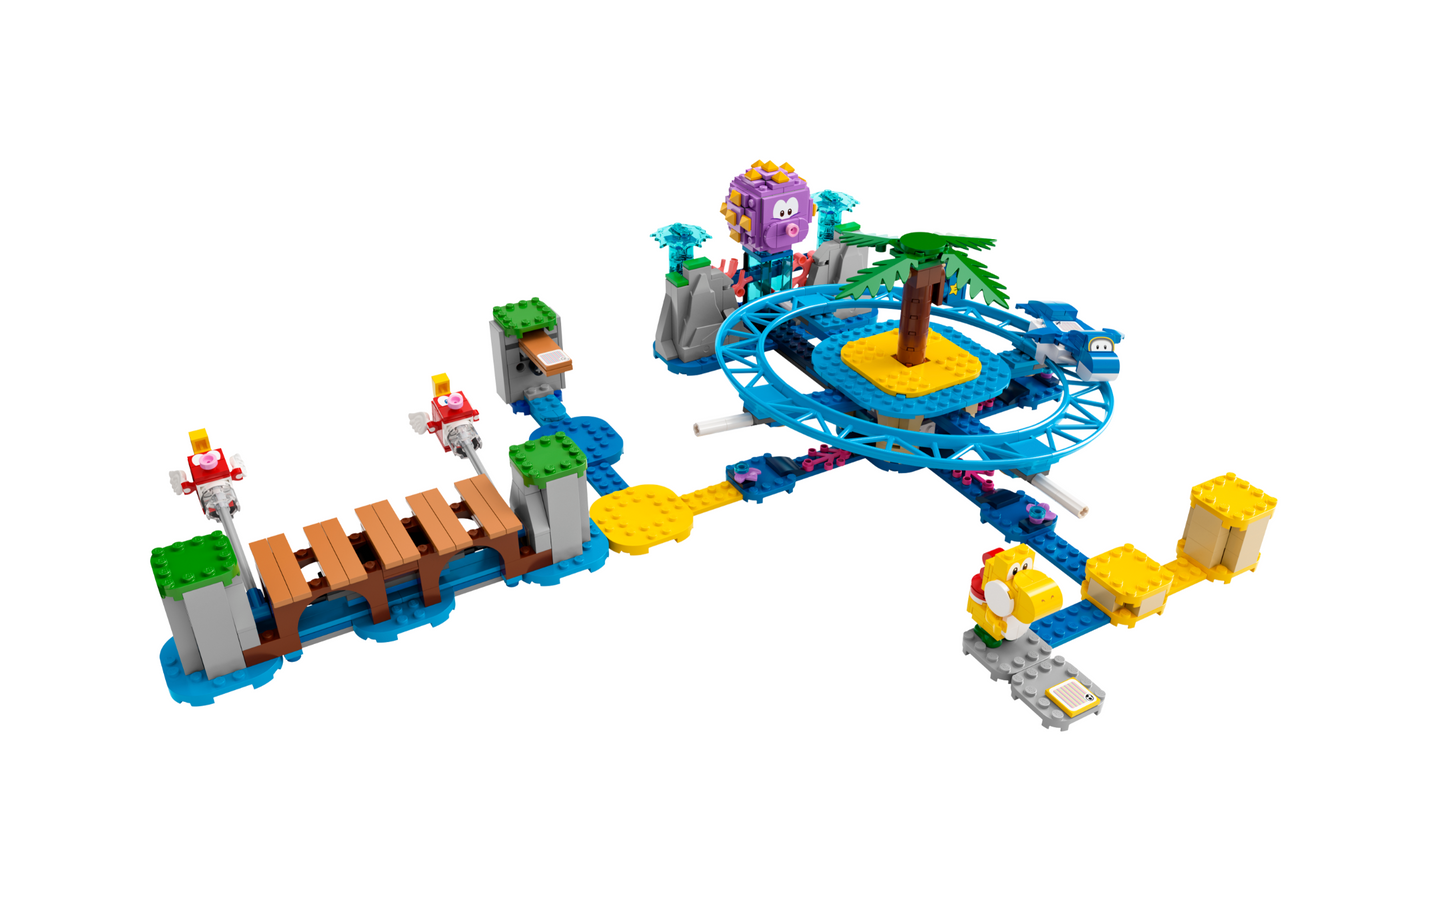 Lego Big Urchin Beach Ride Expansion Set